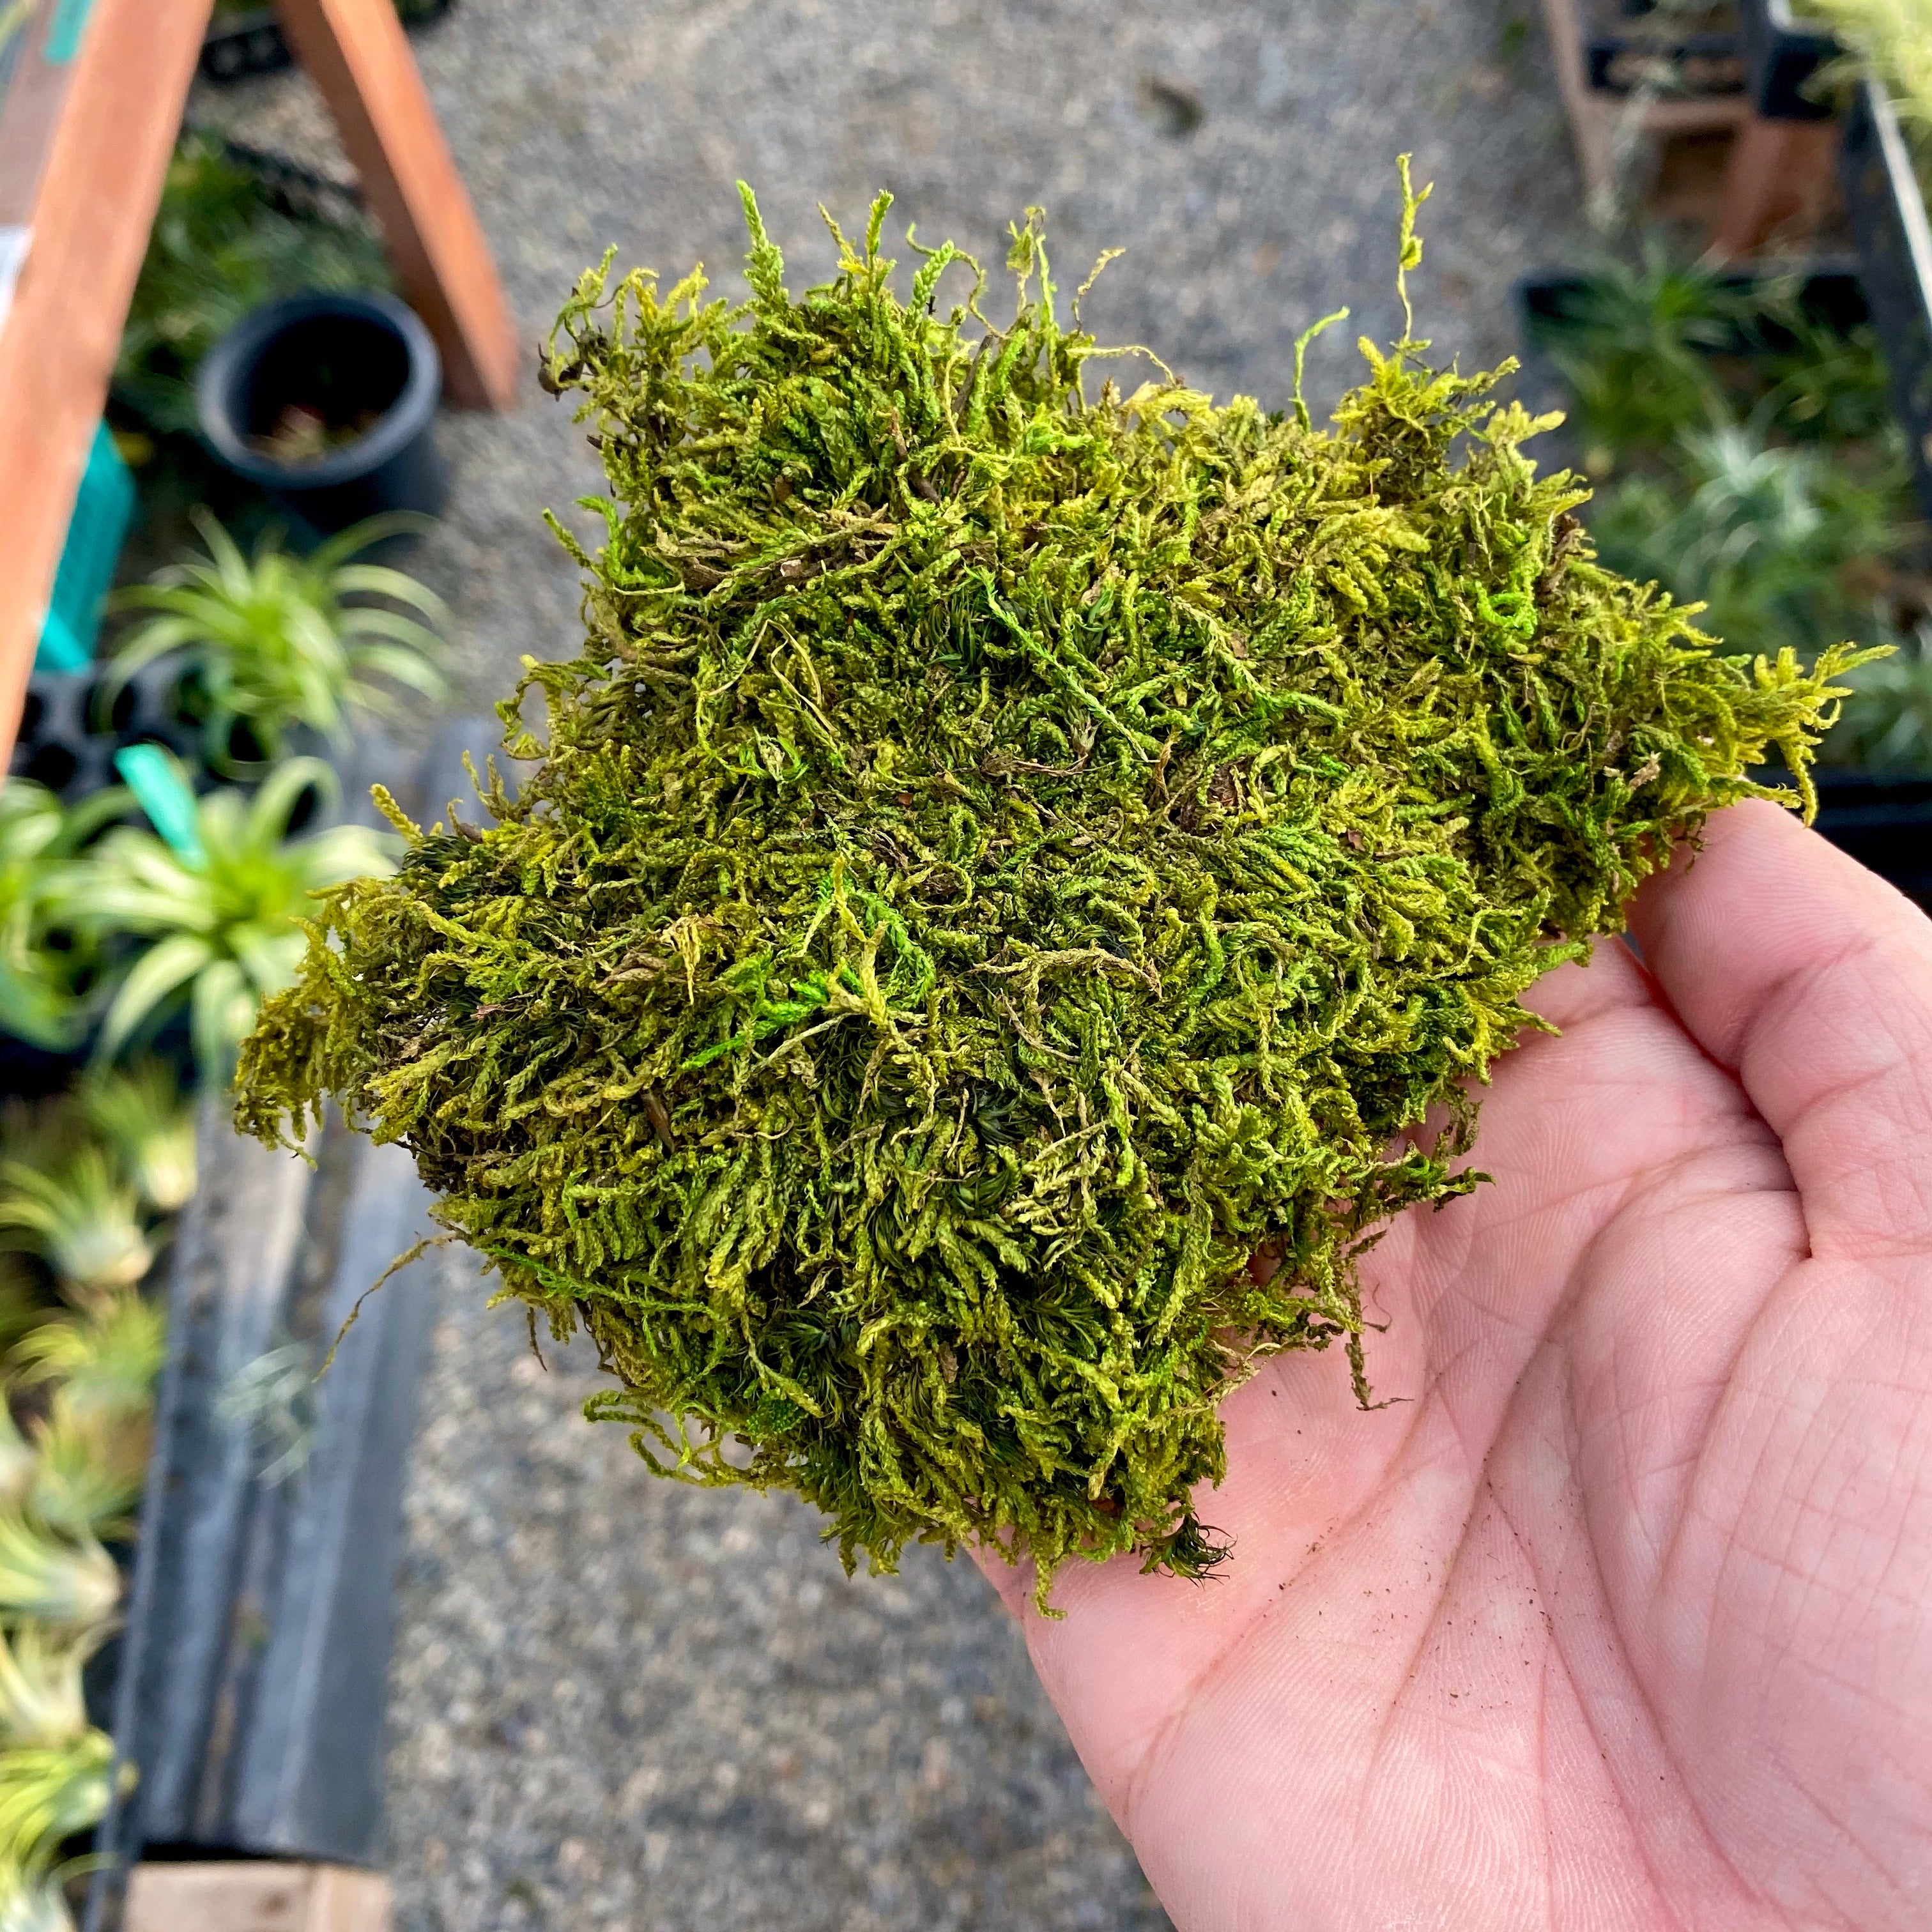 Sheets of moss - Sphagnum Shop